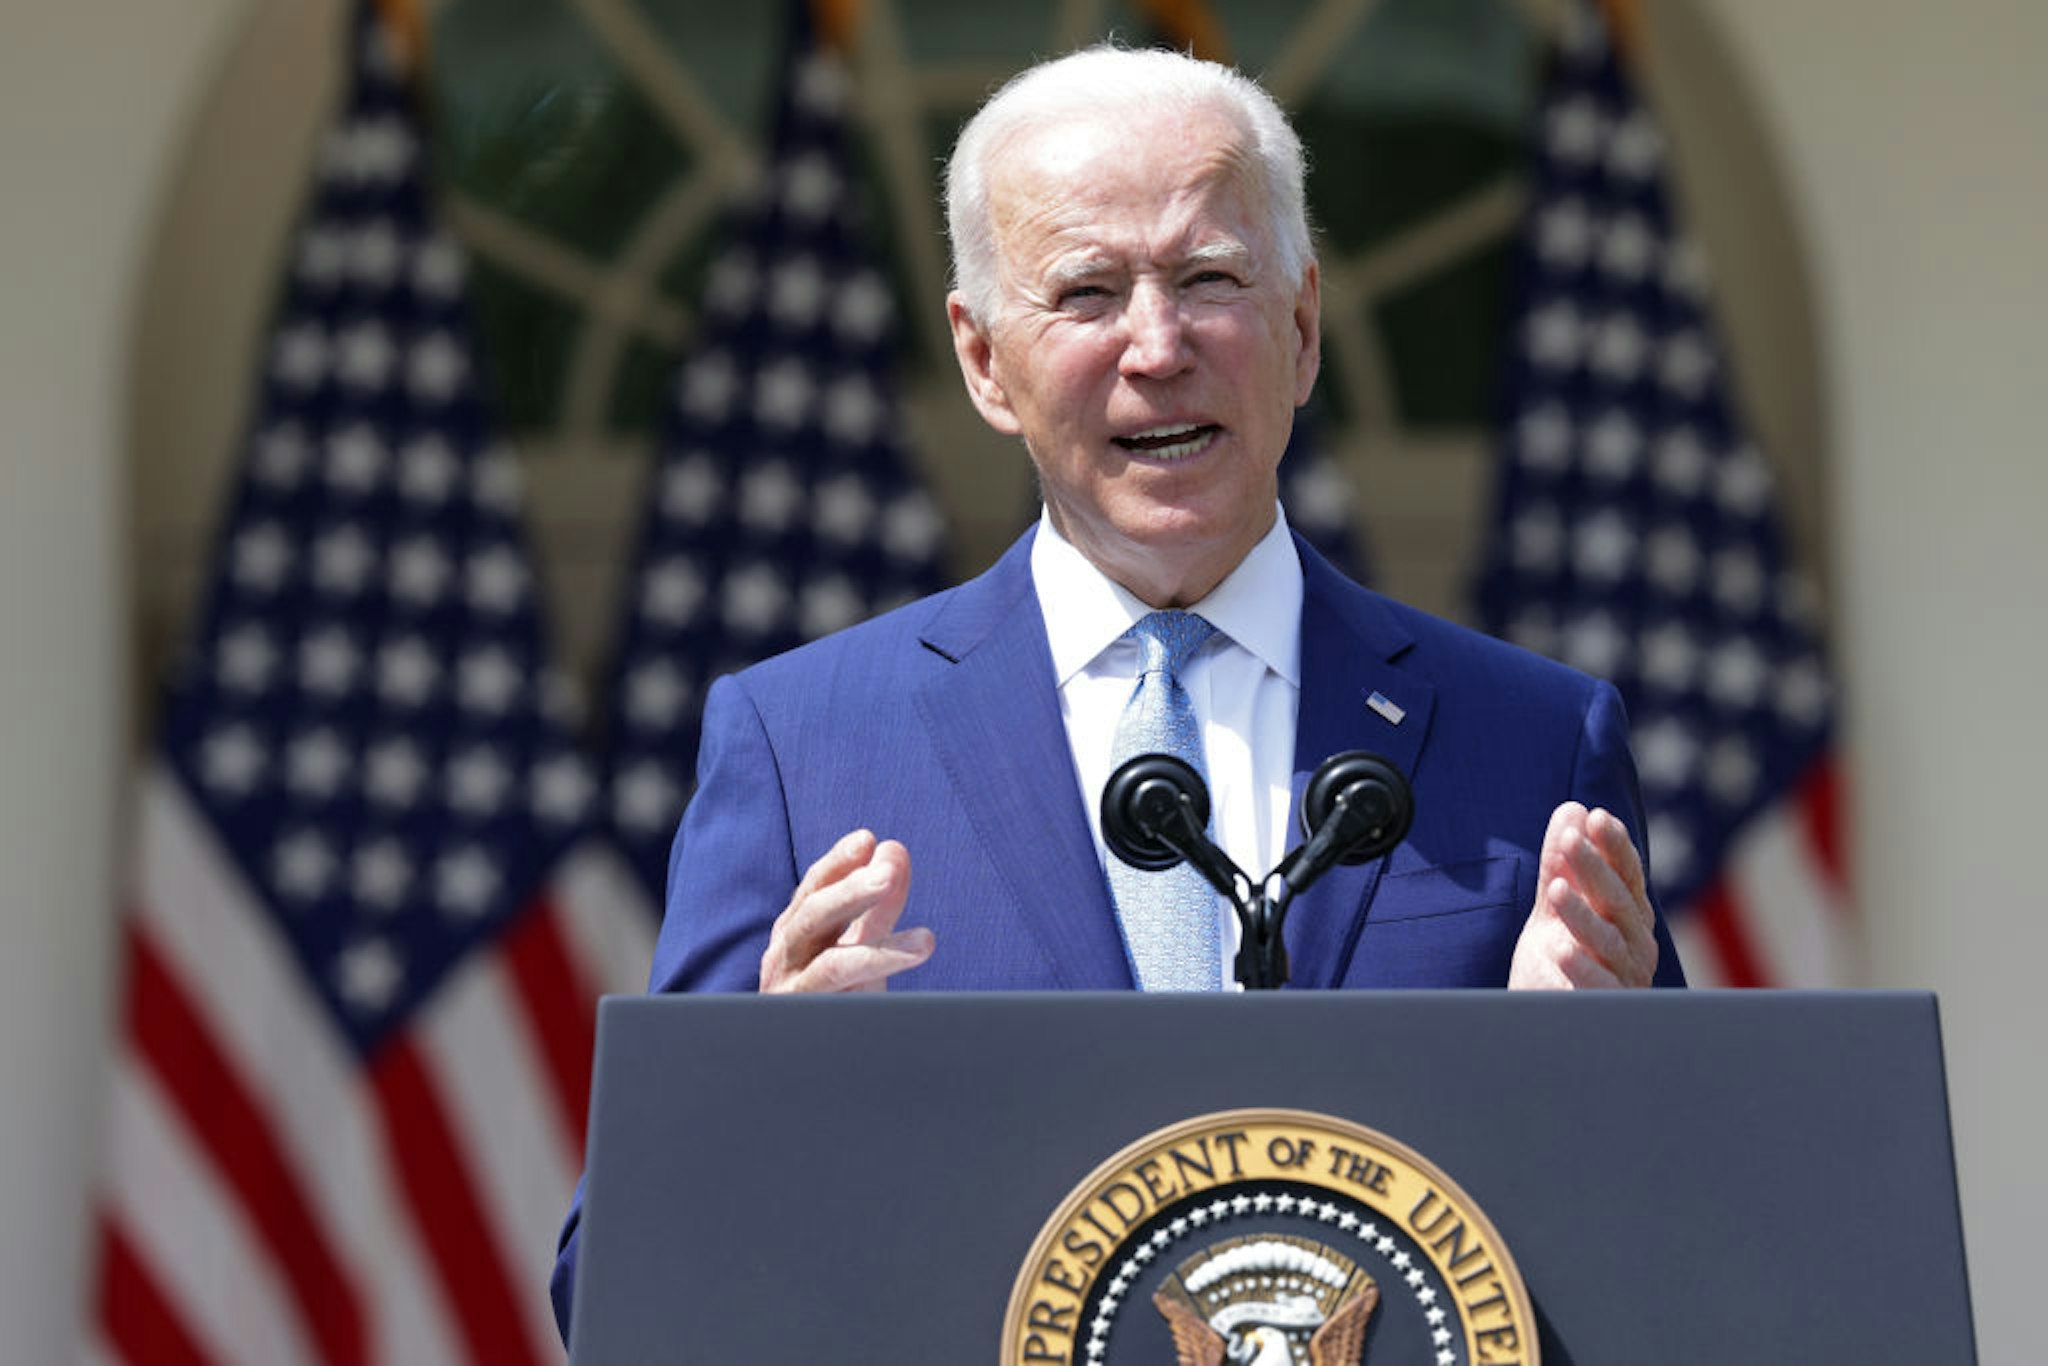 U.S. President Joe Biden speaks during an event on gun control in the Rose Garden at the White House April 8, 2021 in Washington, DC.